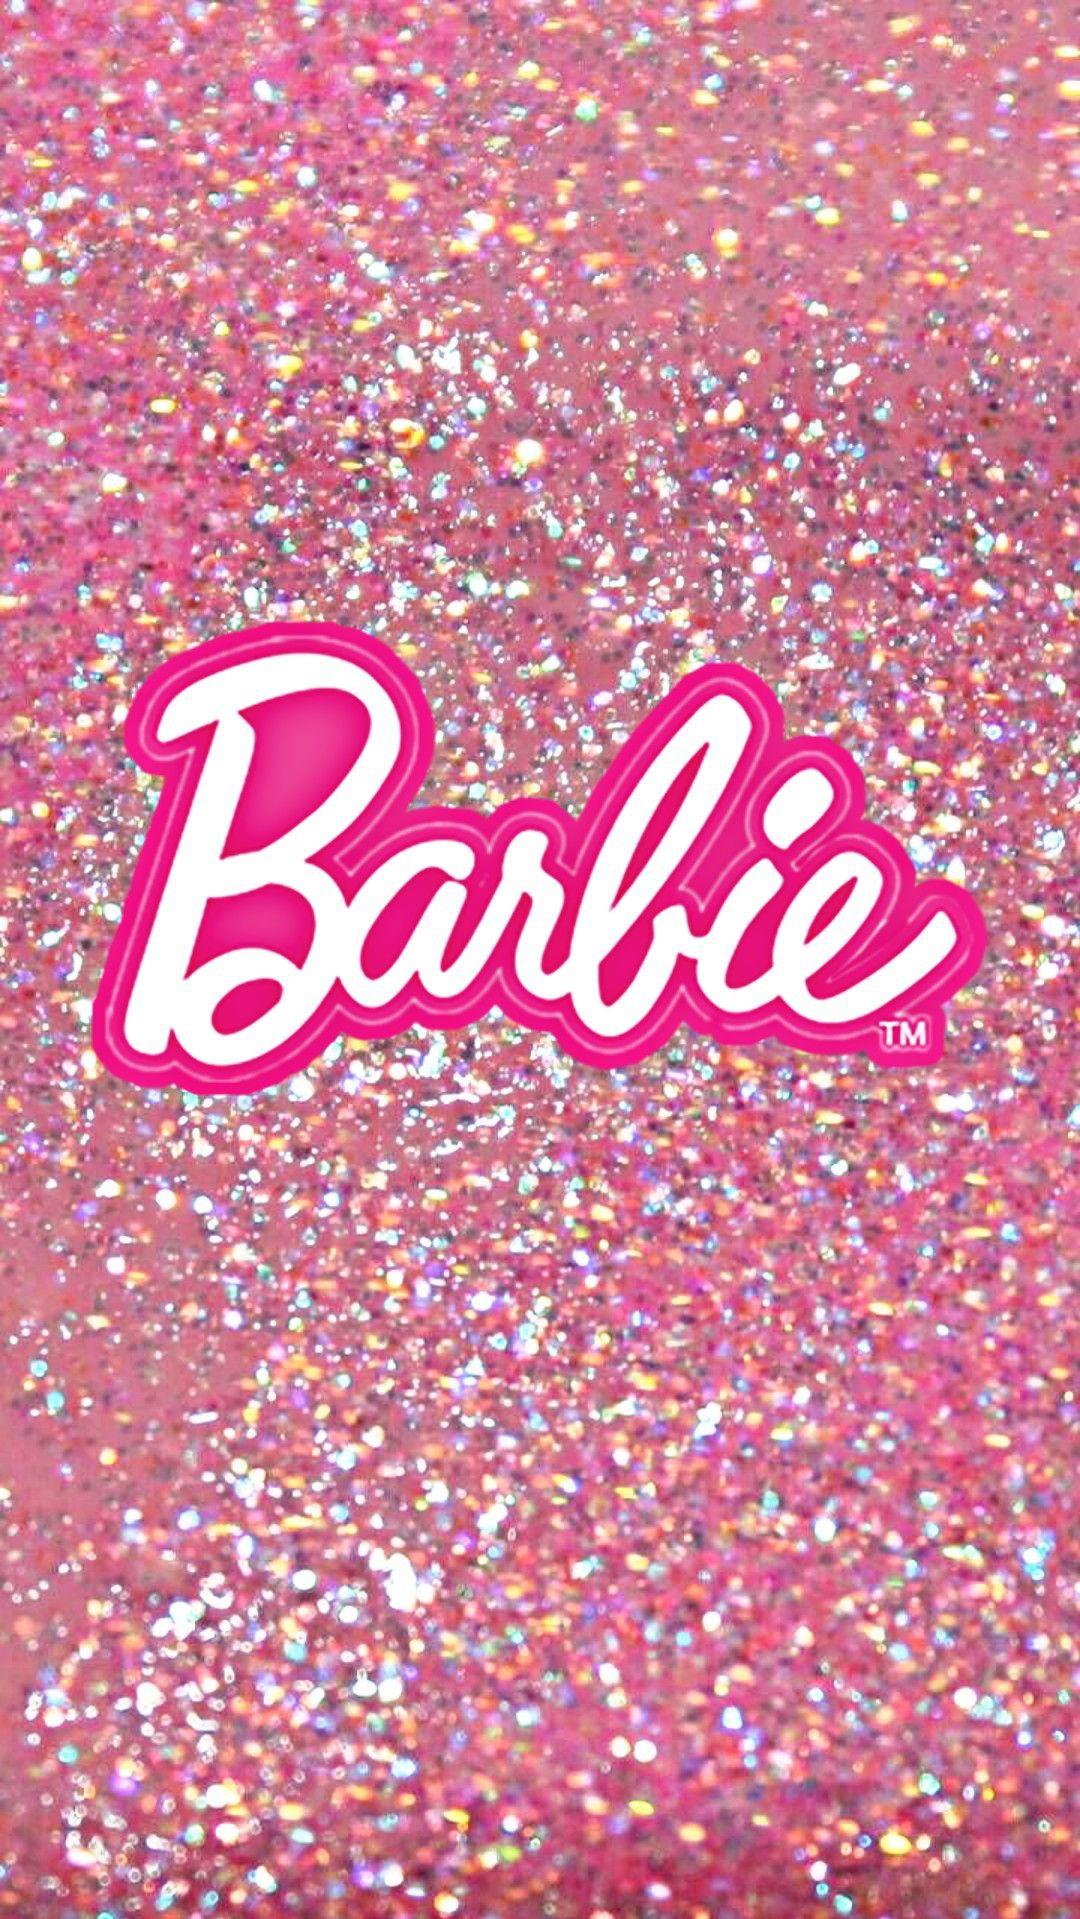 150 Barbie Phone Wallpaper ideas  barbie wallpaper pink wallpaper